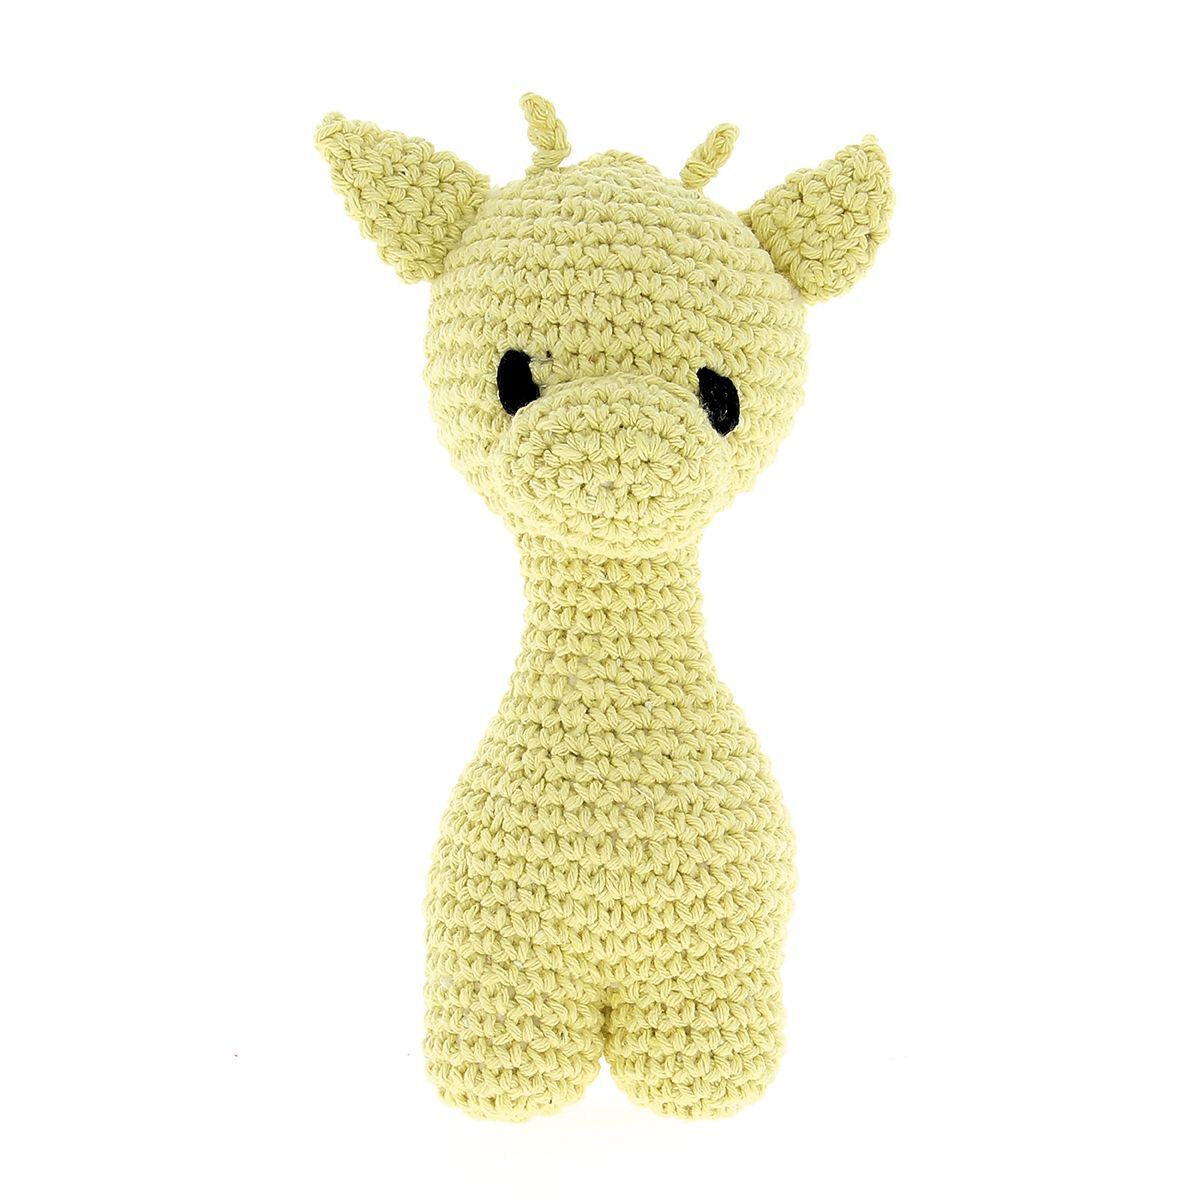 Hoooked - Crochet Kit - Kirby the Cow –